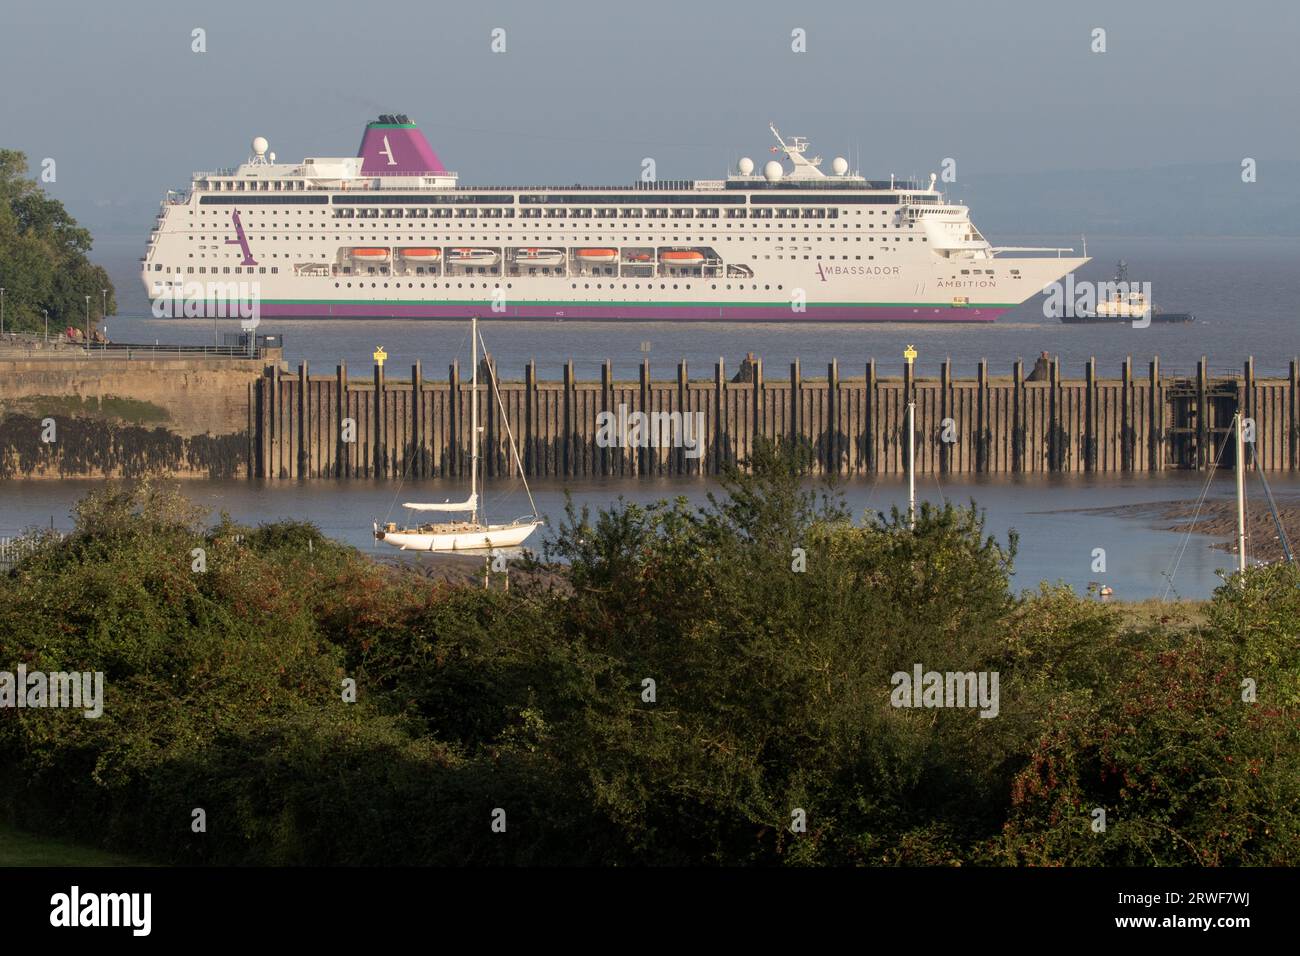 Ambition cruise ship at Portishead Stock Photo